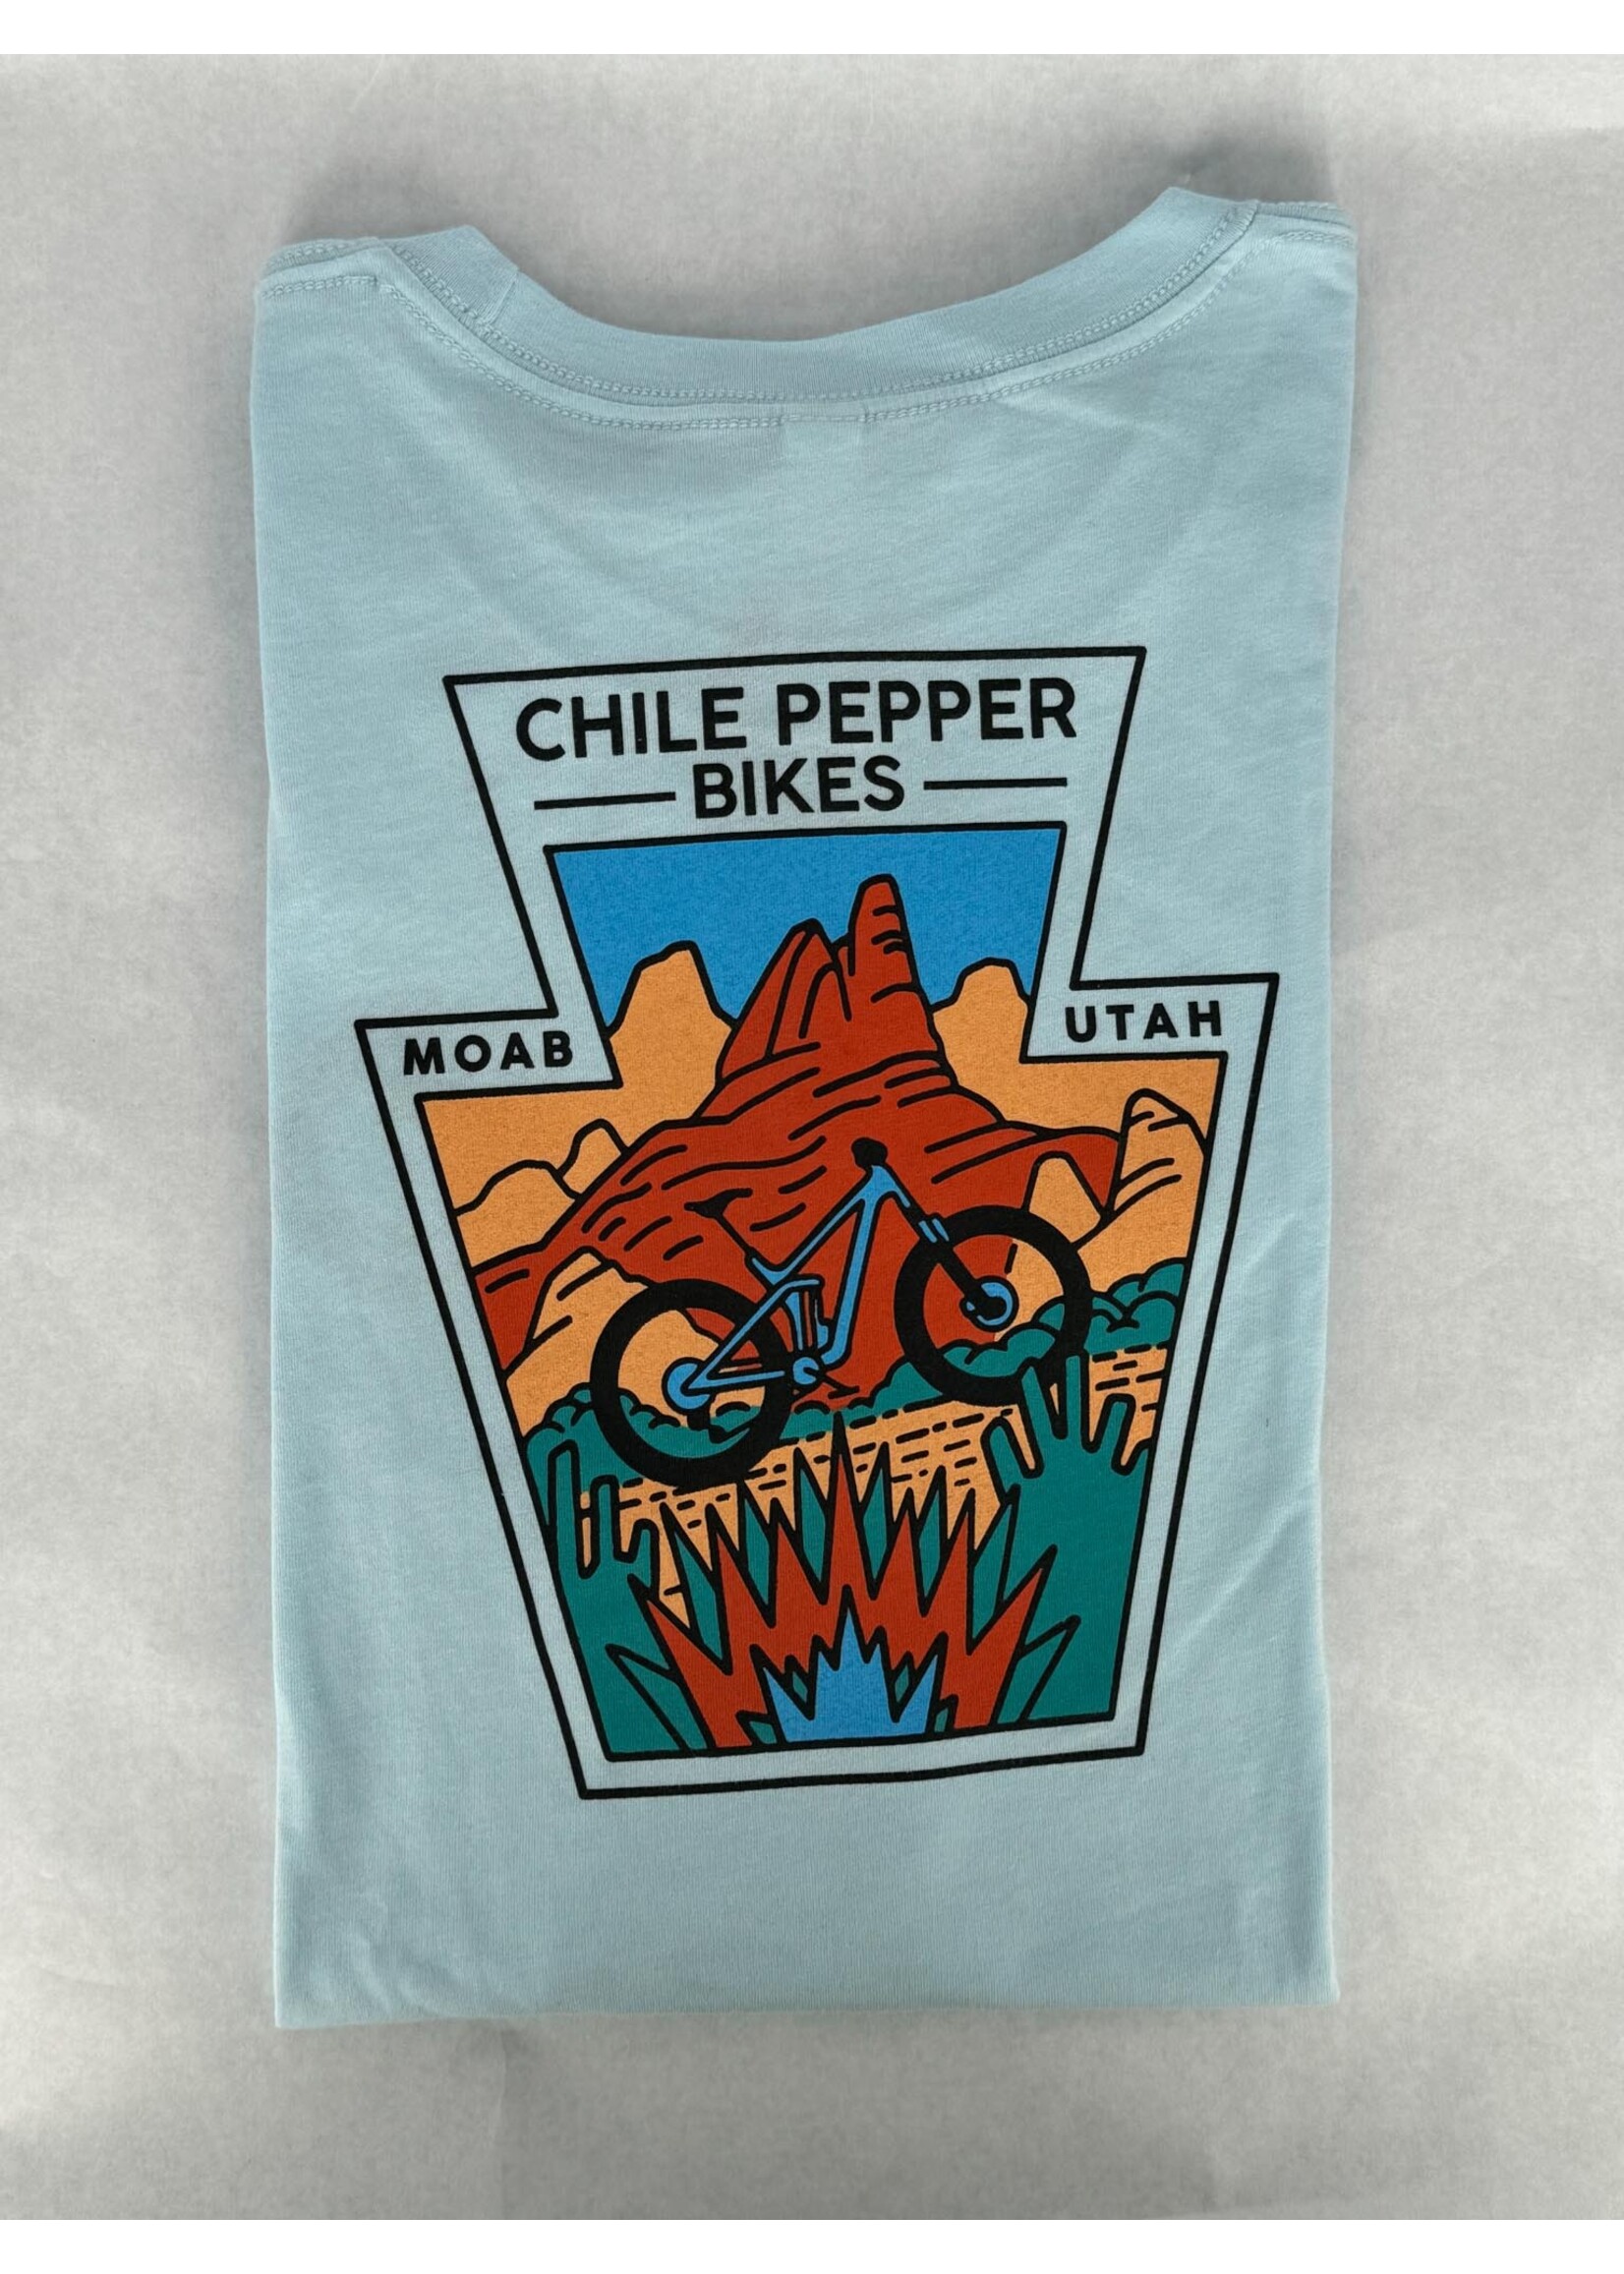 Chile Pepper Chile Pepper 5C Parker Tee - Men's/Unisex